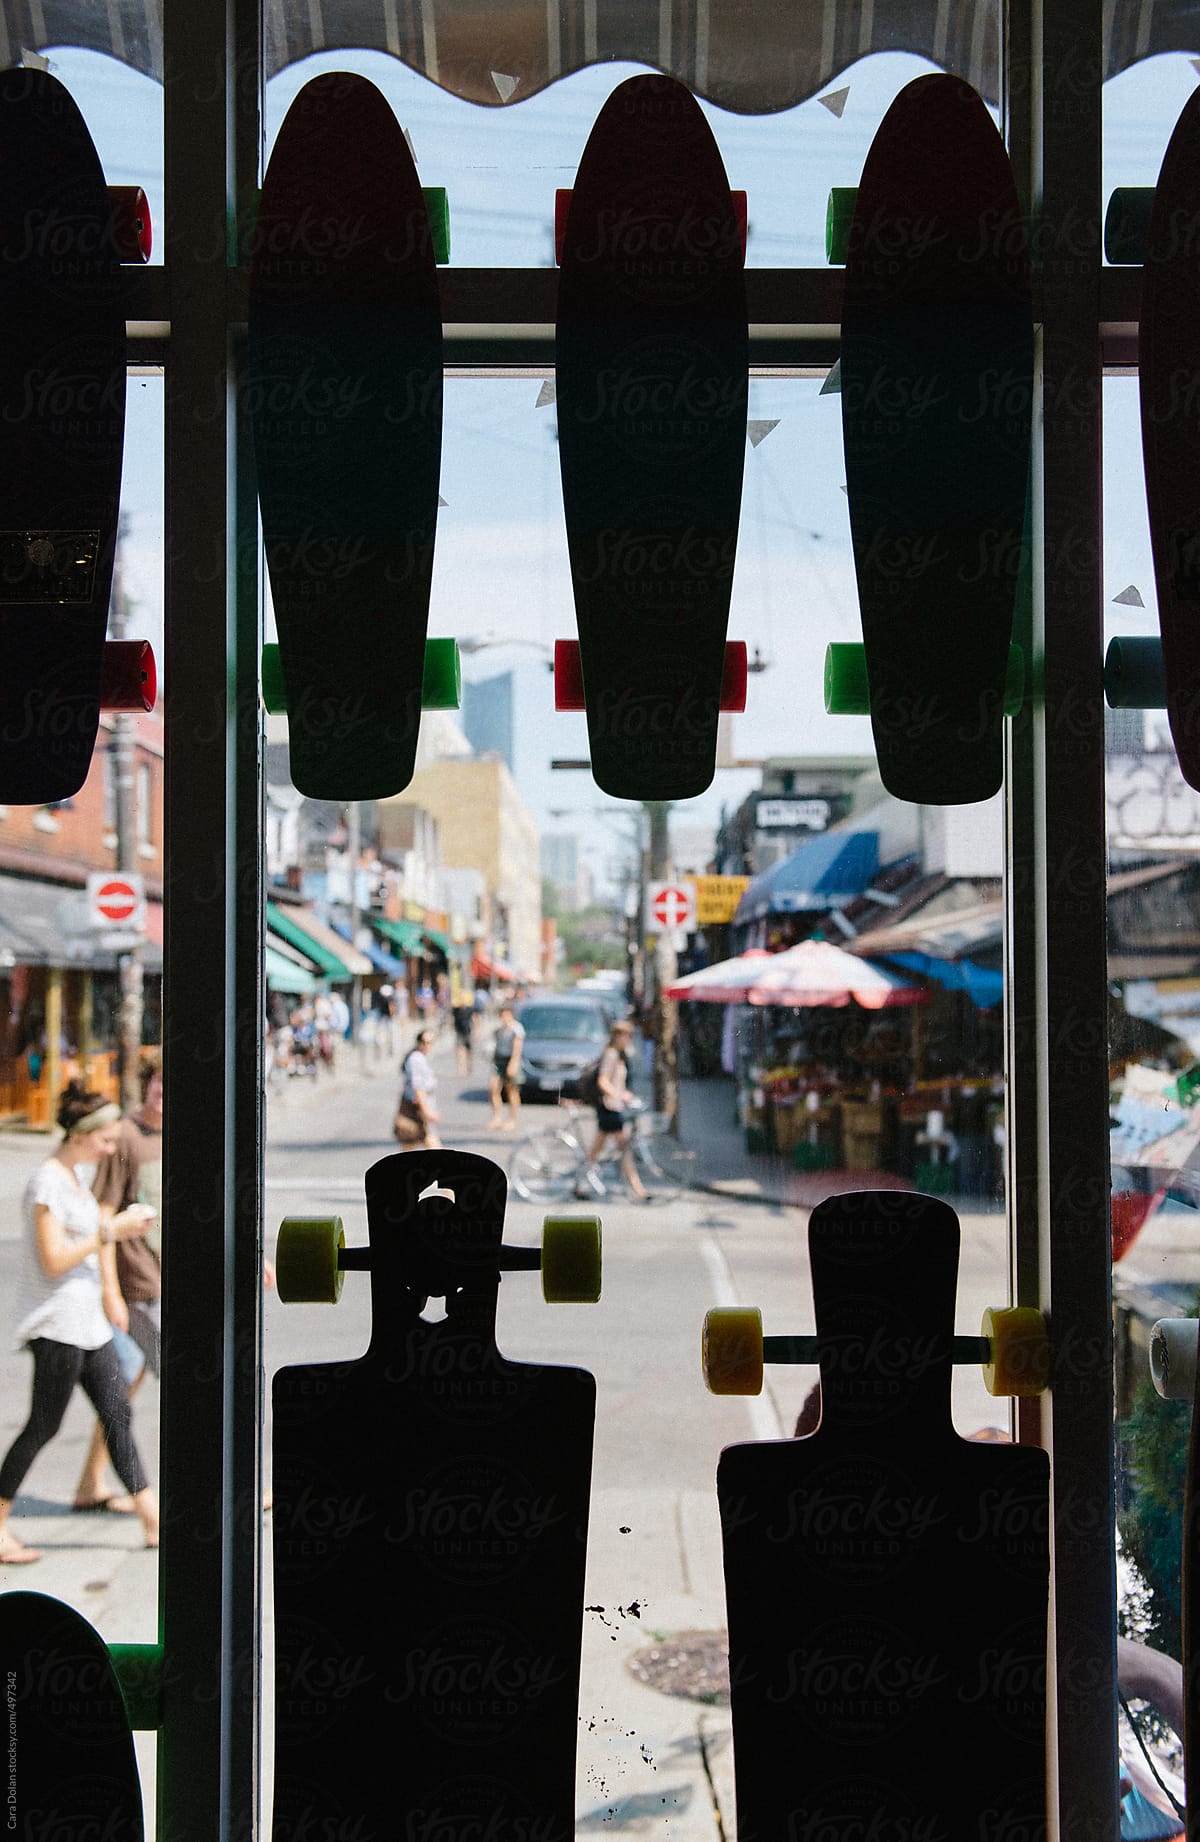 Skateboards hanging in a shop window